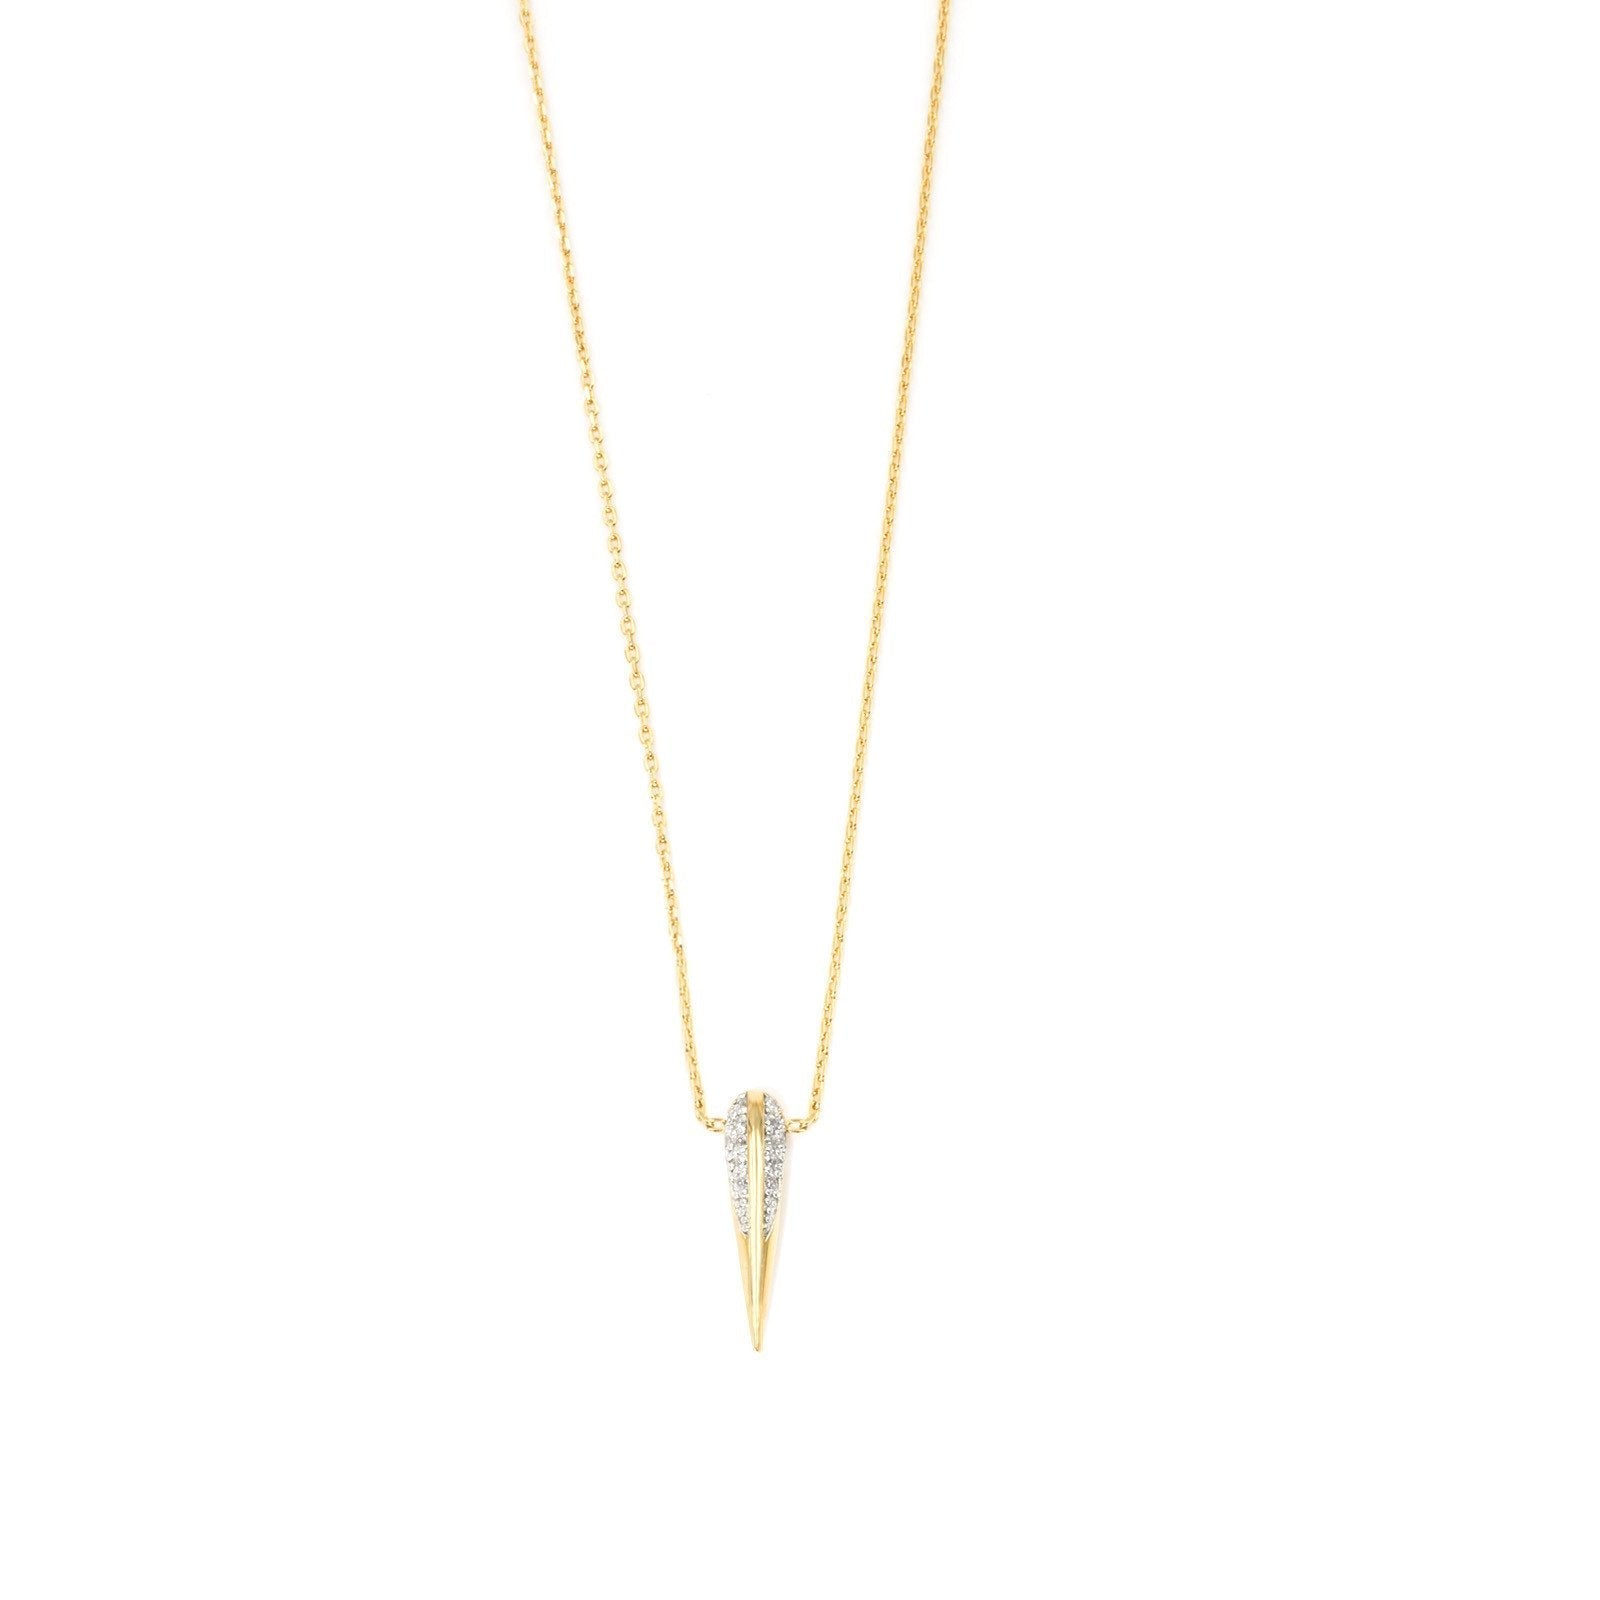 Phoenix- Small Gold Beak Necklace - Camille Jewelry